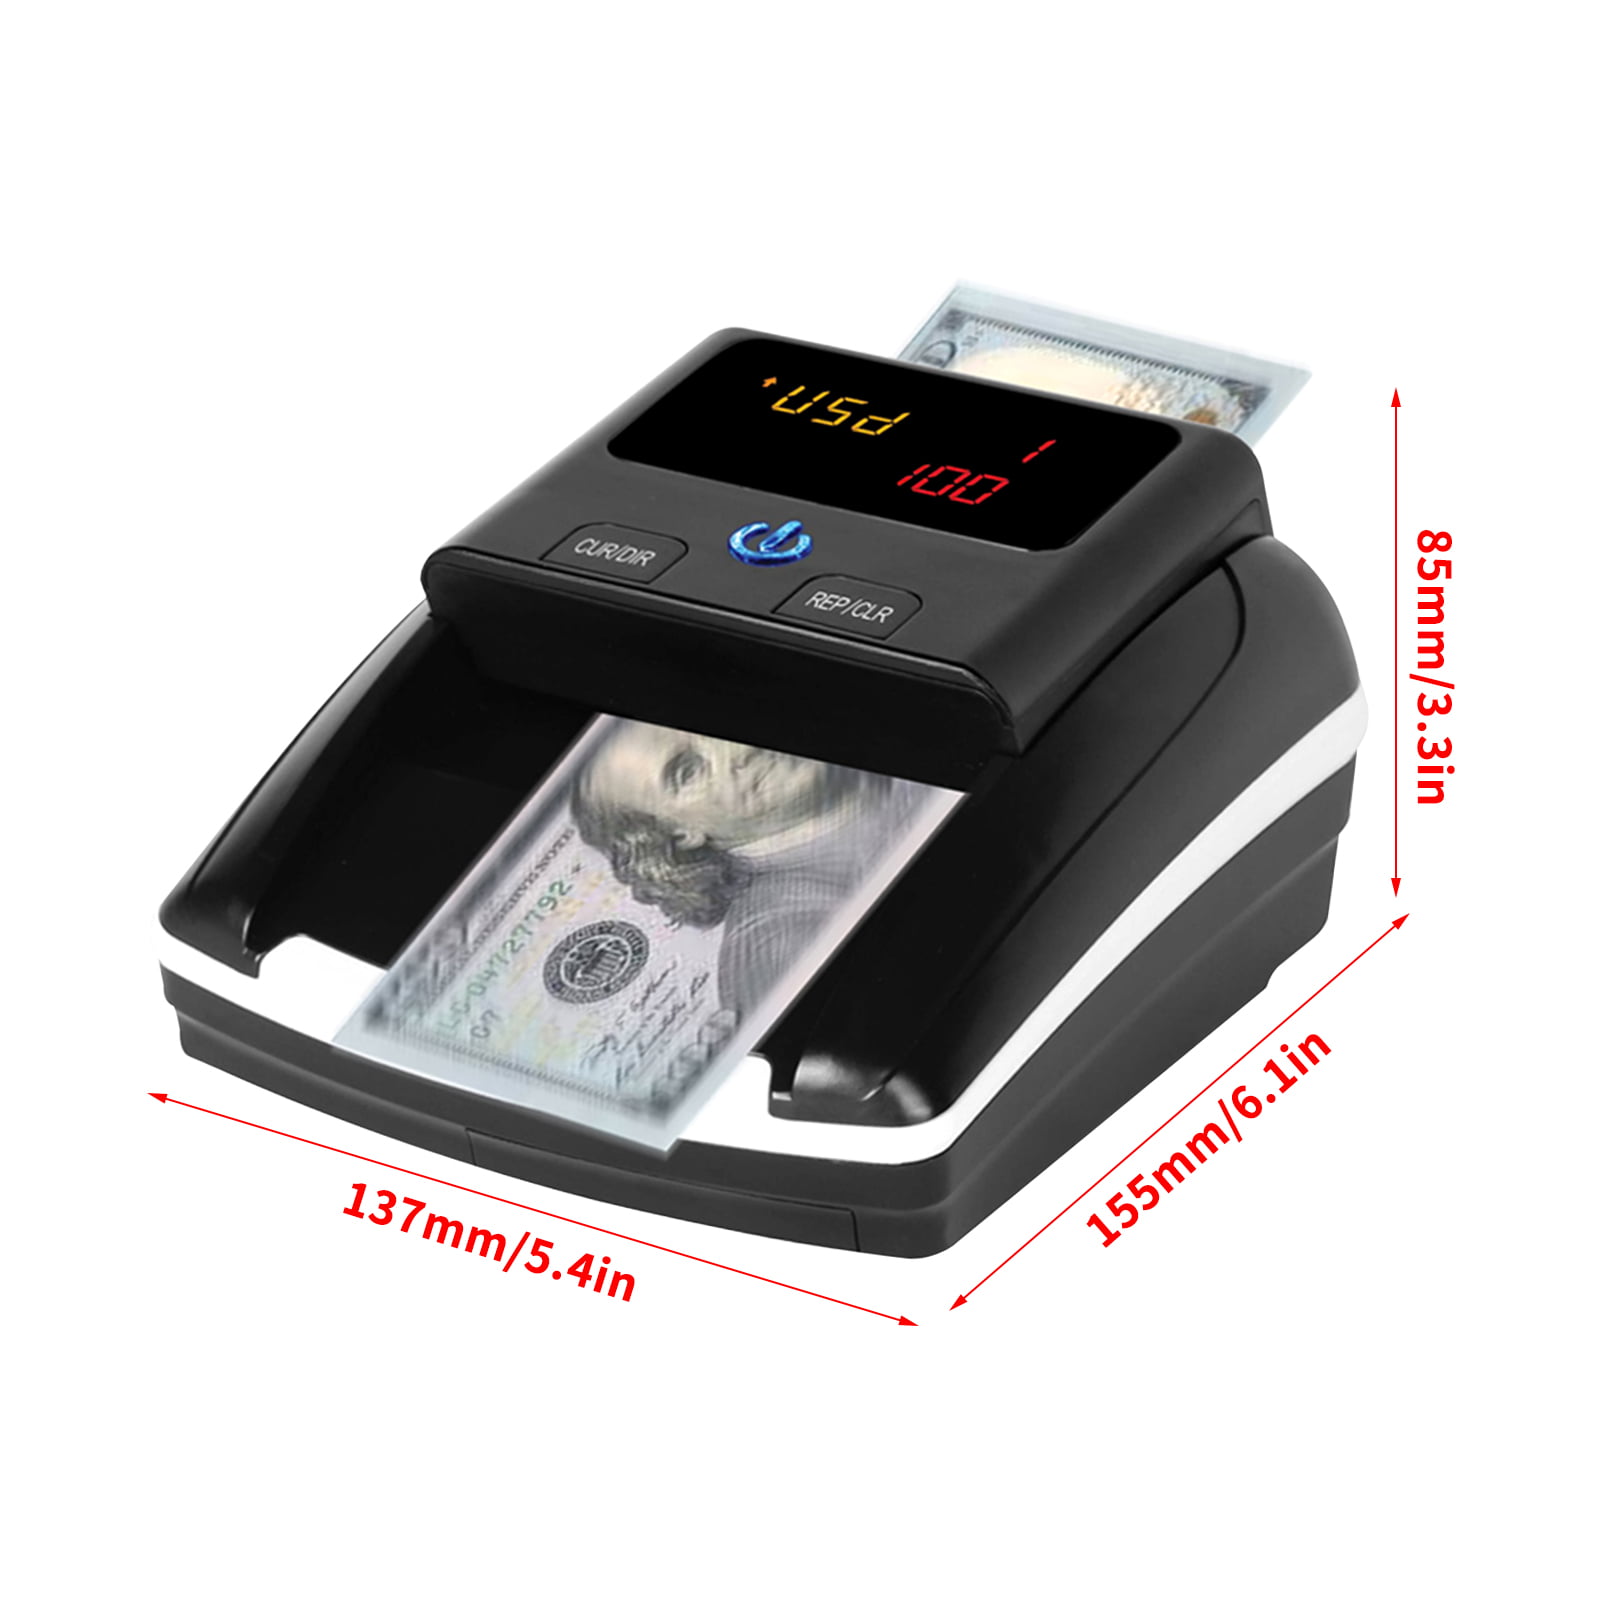 ACCUBANKER D450 Bleached Bills Auto Detector Immediate banknote verification NEW 